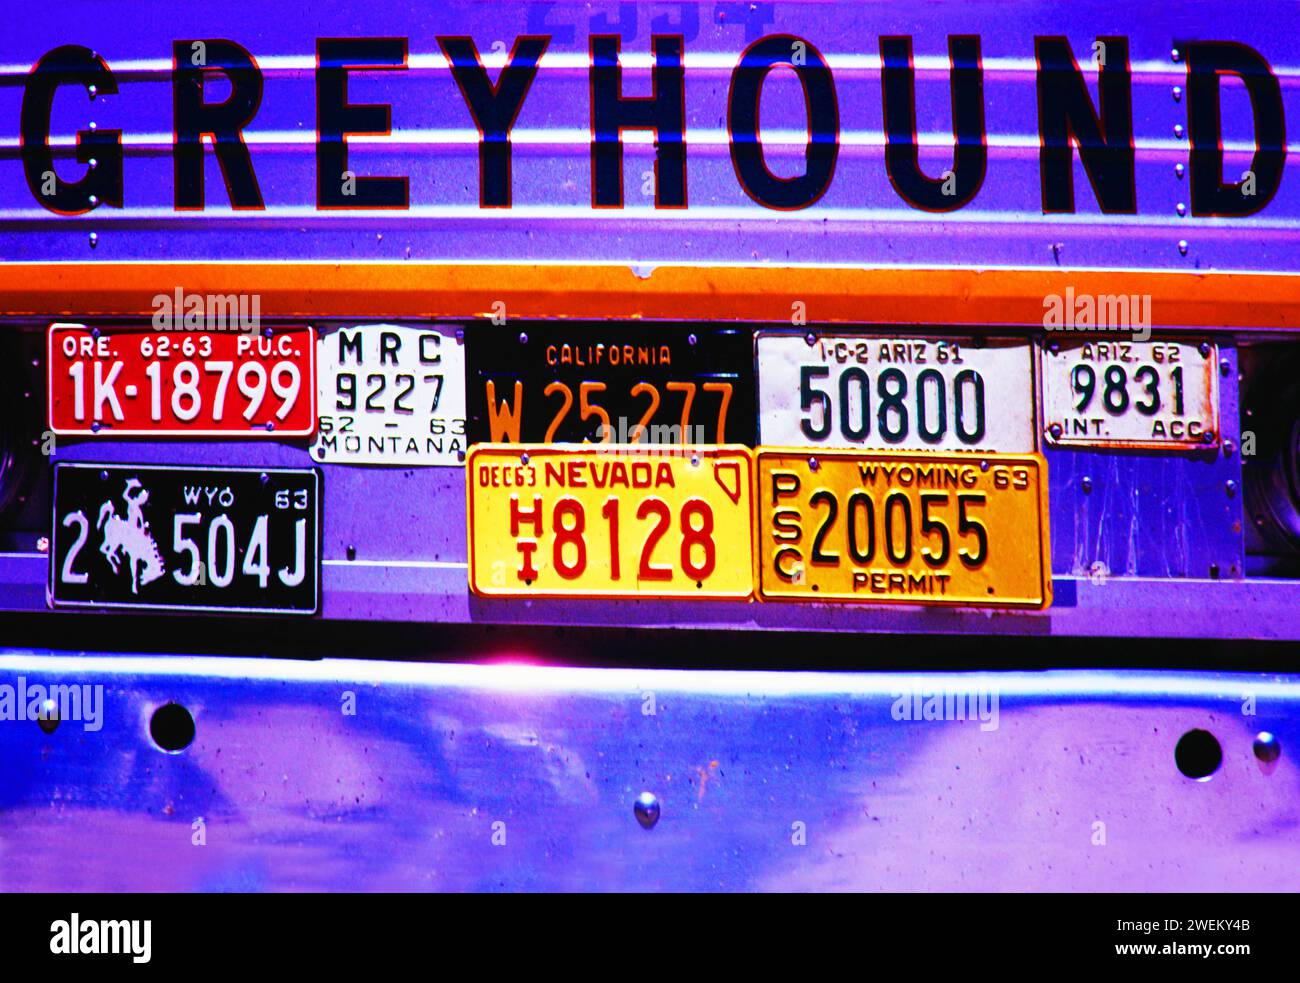 GREYHOUND Bus USA,20240101, Aufnahme ca. 1964, Symbolbild,GREYHOUND Bus *** GREYHOUND Bus USA,20240101, photo ca 1964, symbolic image,GREYHOUND Bus Stock Photo